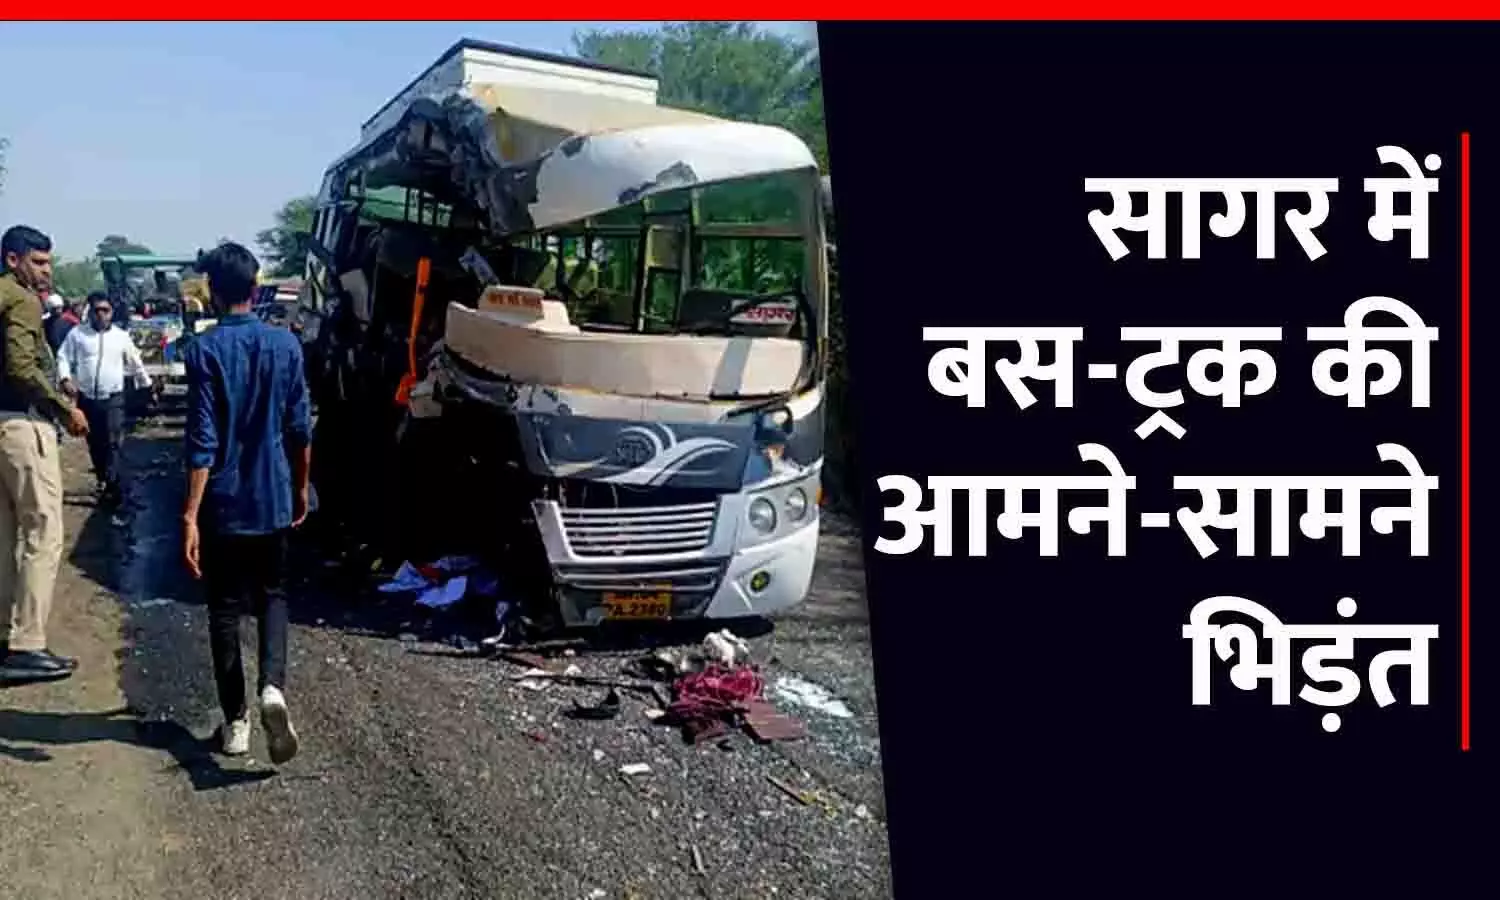 Bus-truck collision in Sagar